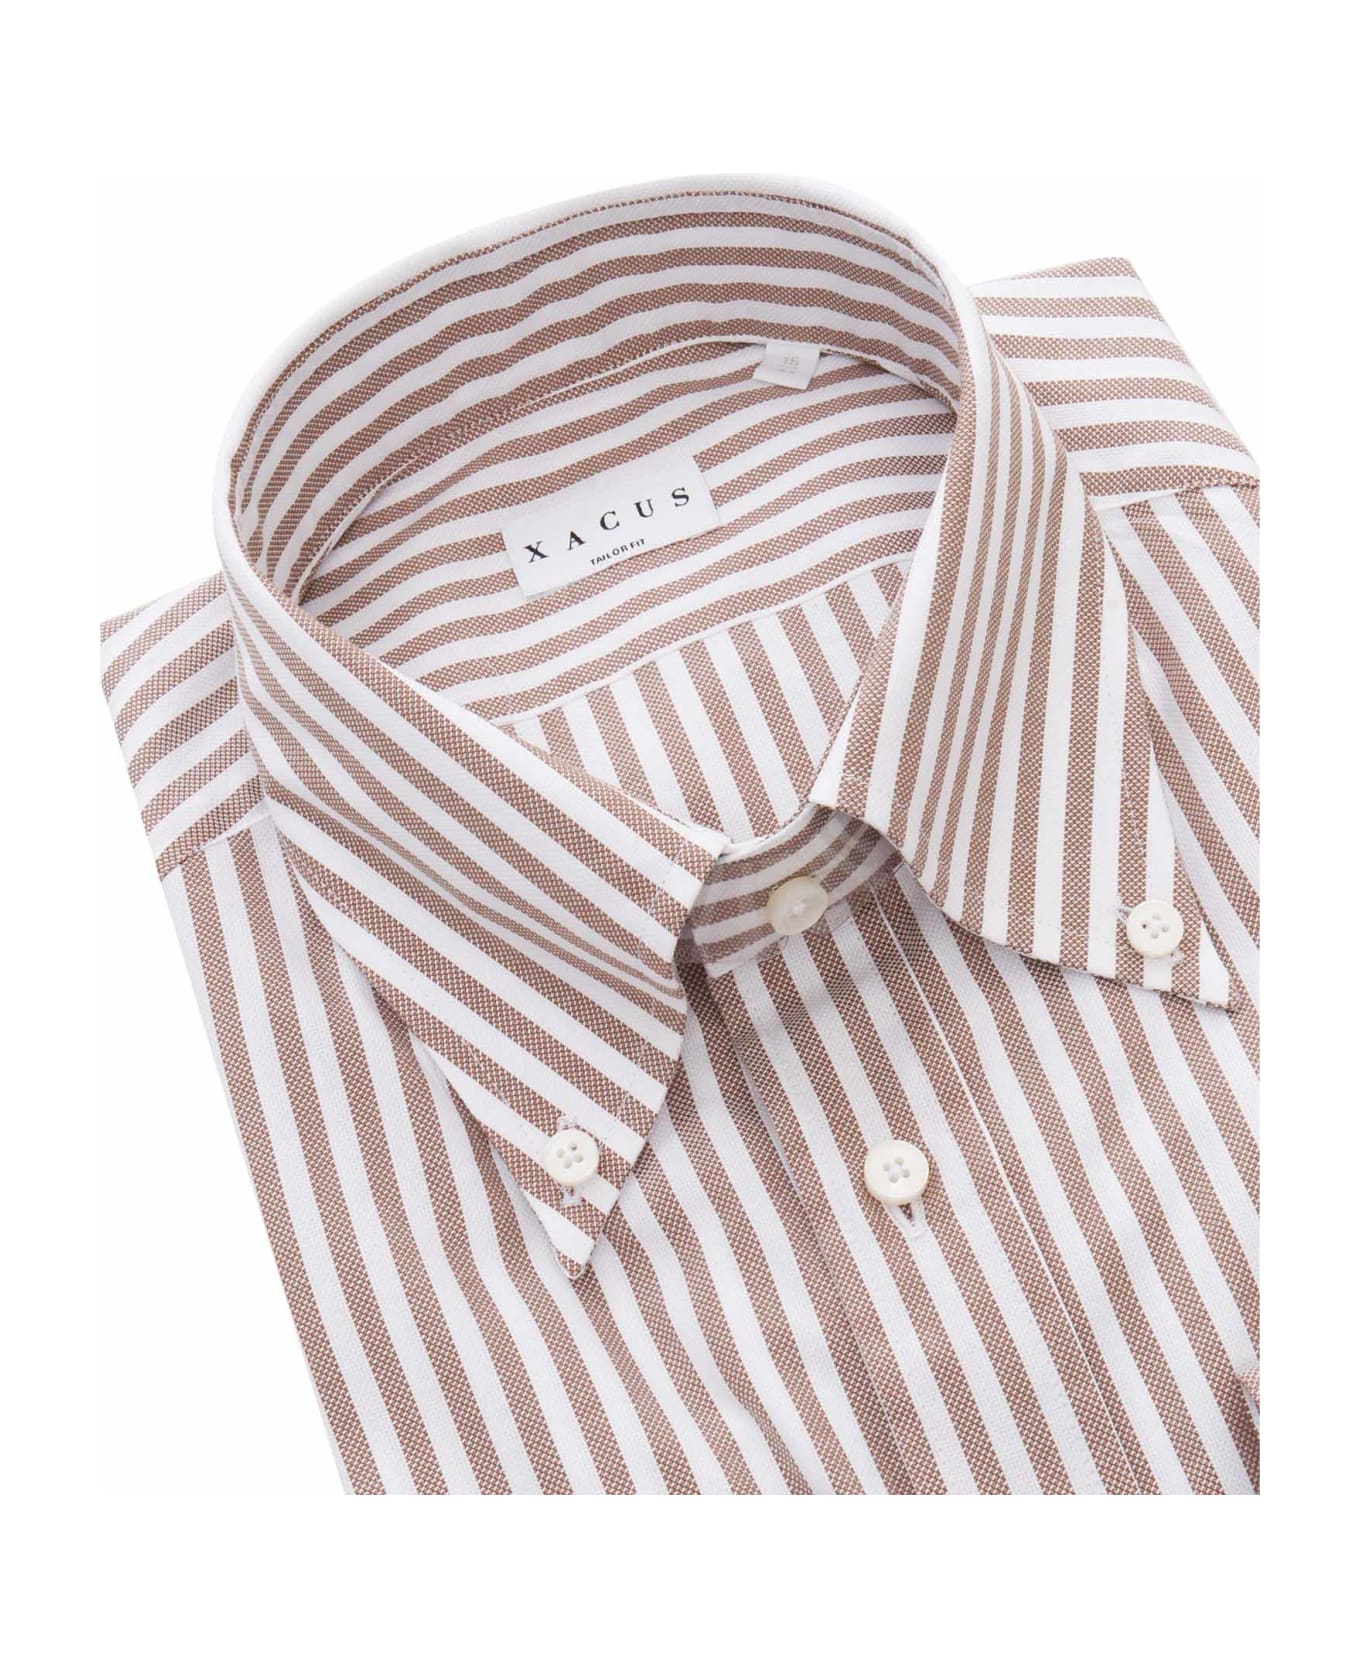 Xacus Brown Striped Cotton Shirt - MULTICOLOR シャツ